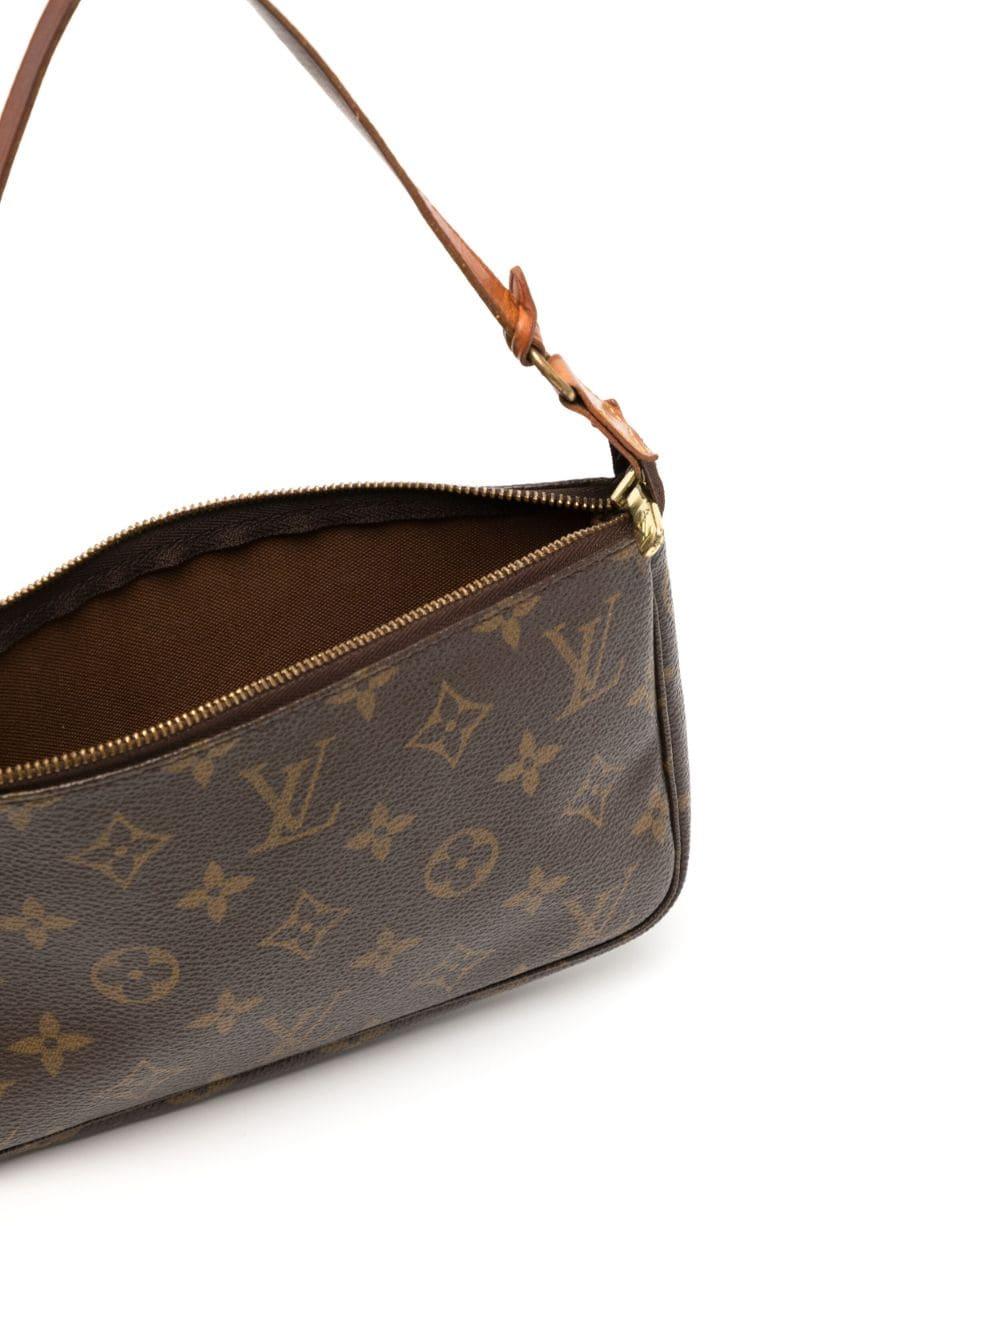 Women's or Men's Louis Vuitton Monogram Pochette Handbag